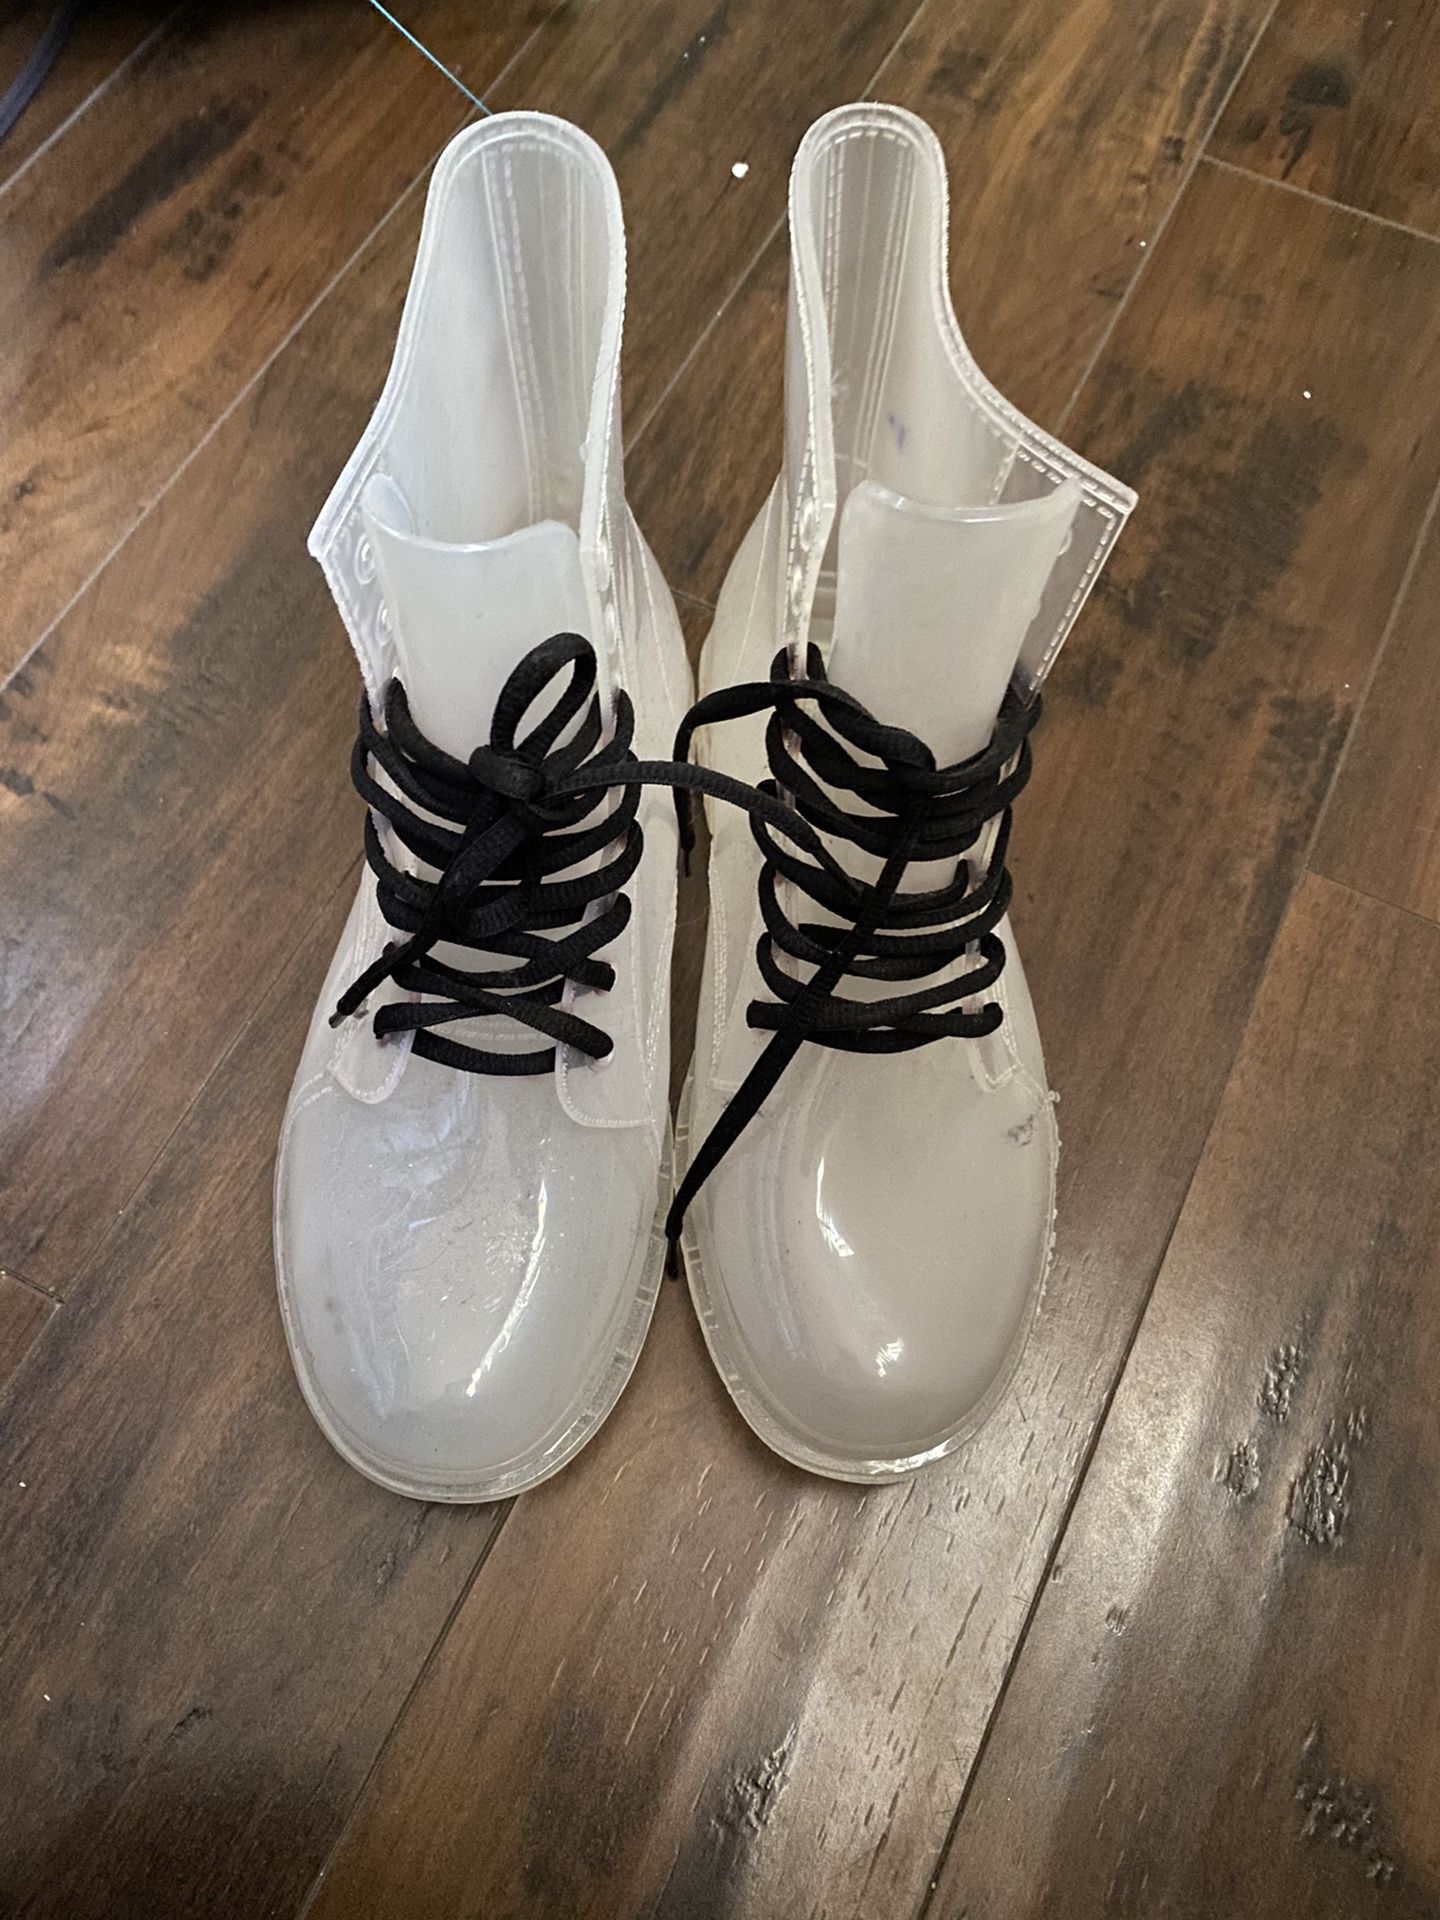 Opaque rain boots